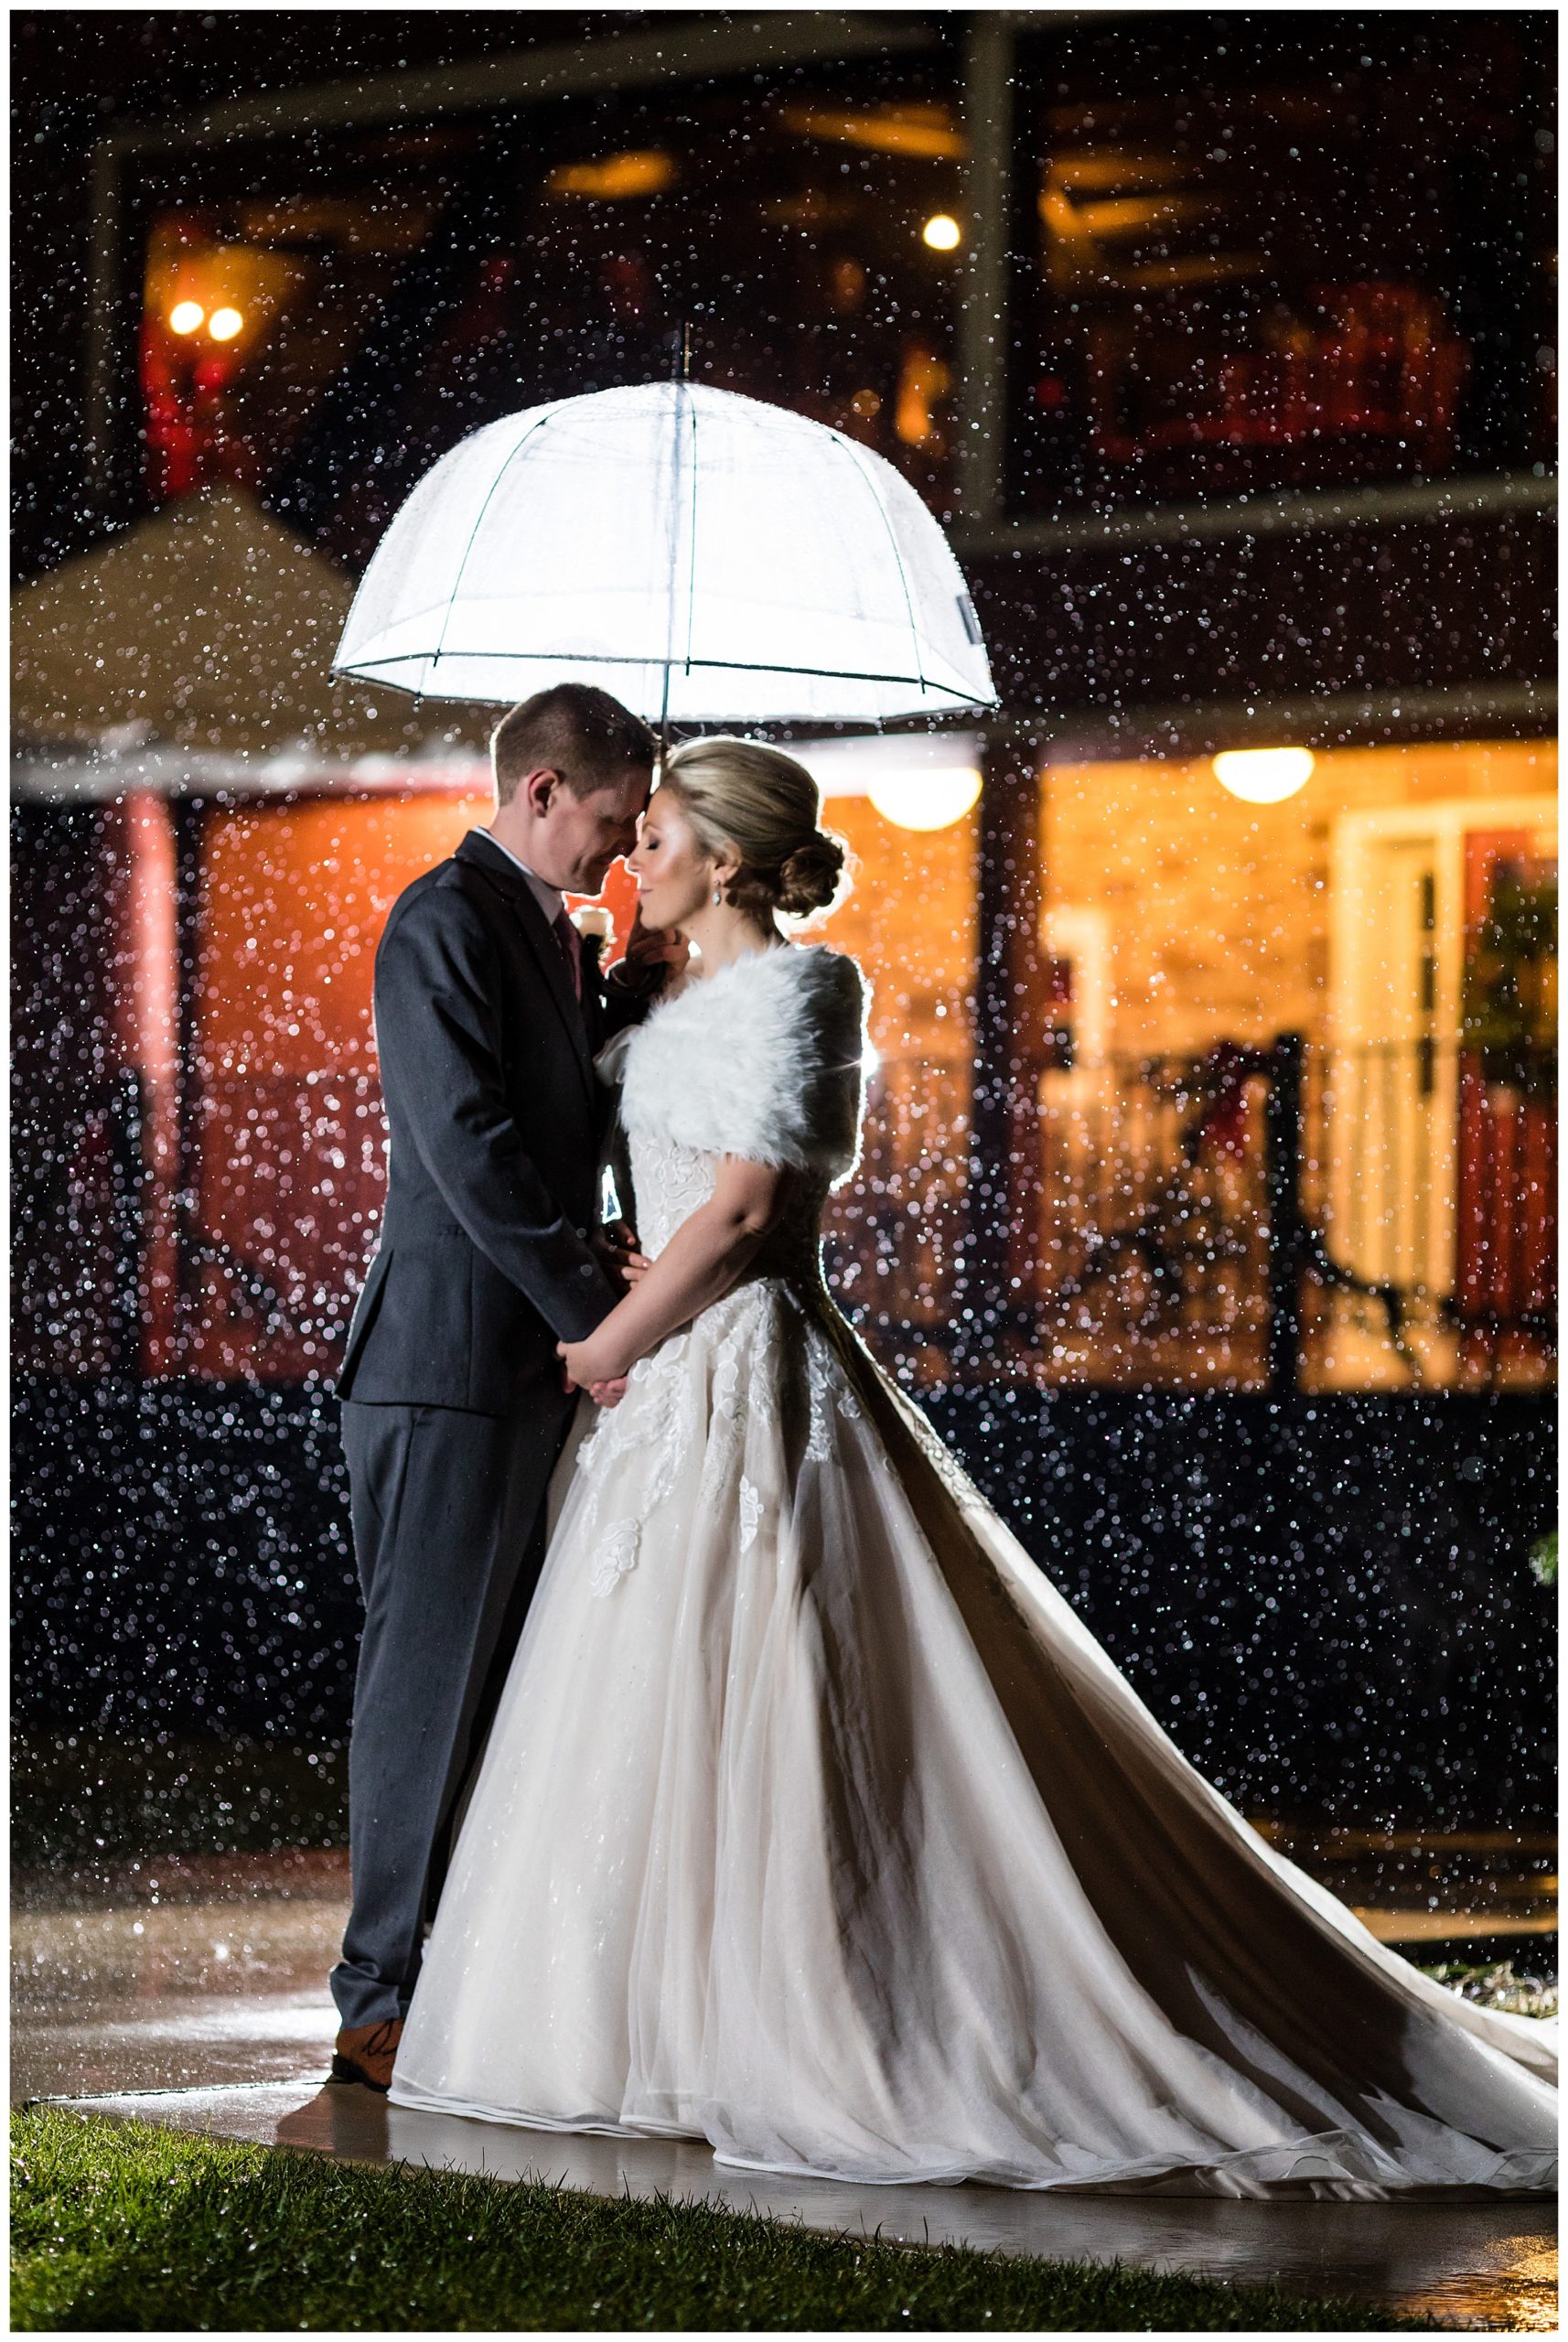 Bride and groom snuggle under umbrella in snow at Barn on Bridge holiday winter wedding